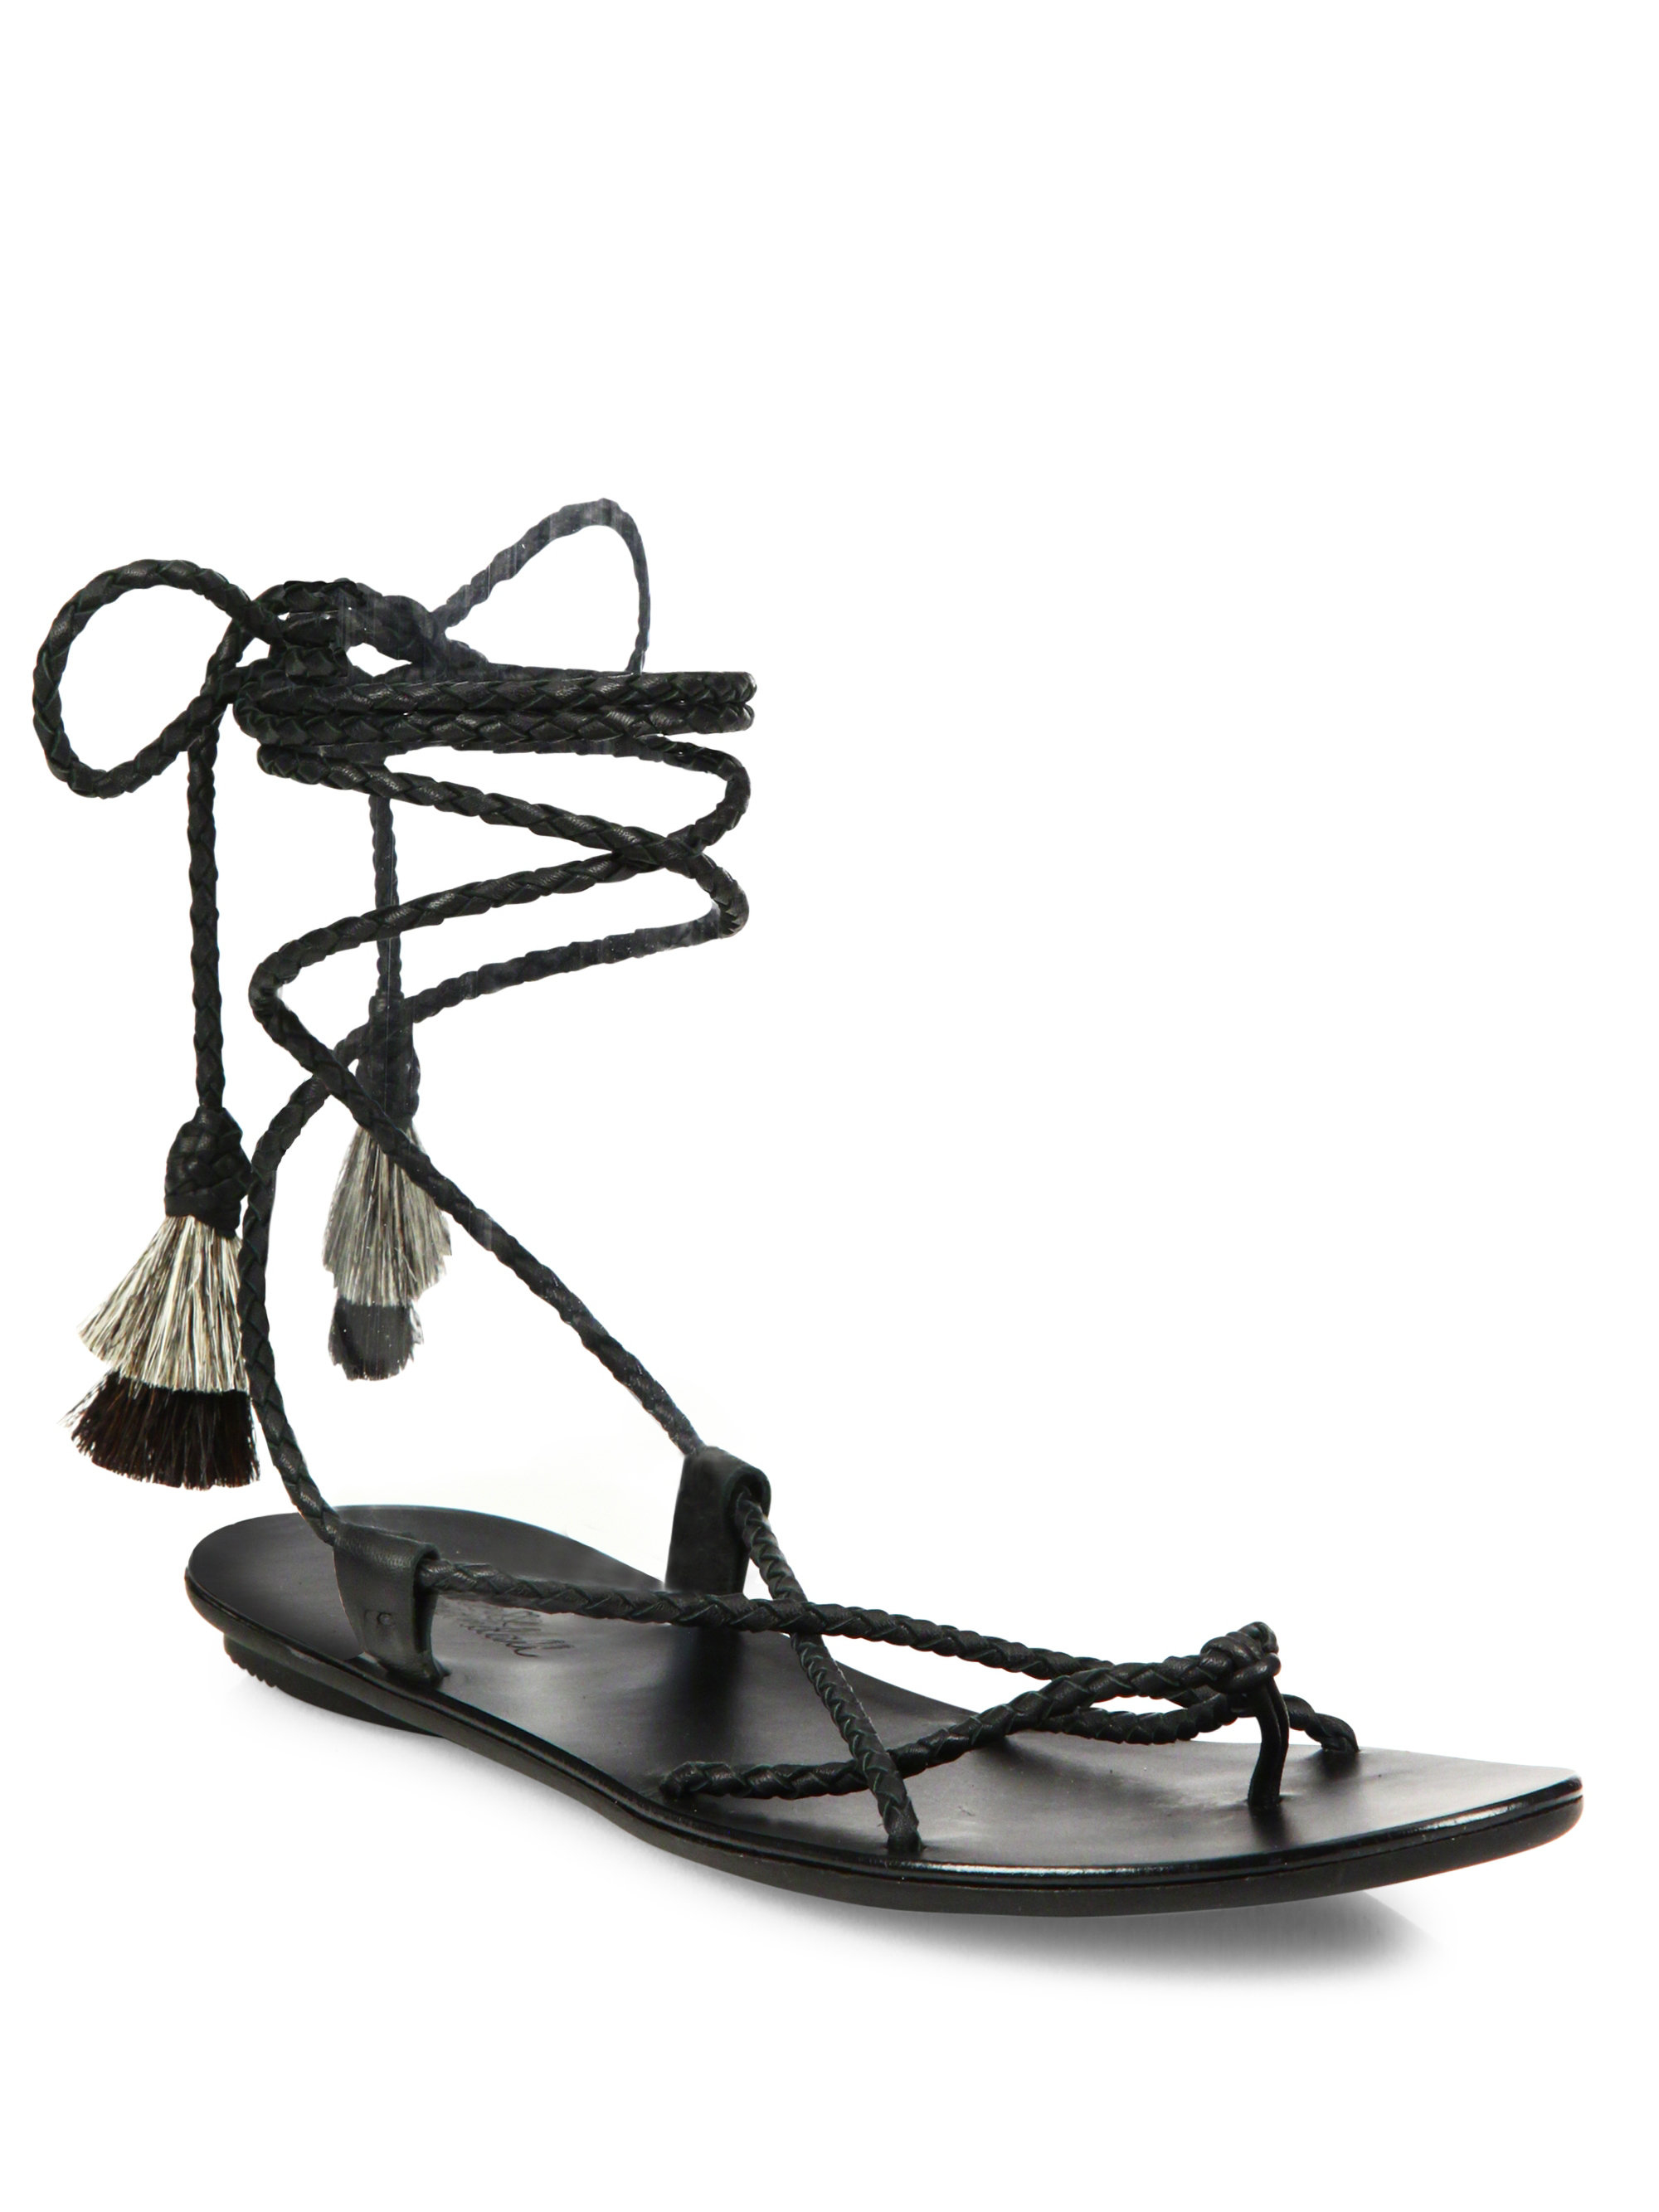 Loeffler randall Bo Braided Leather Ankle-wrap Sandals in Black | Lyst